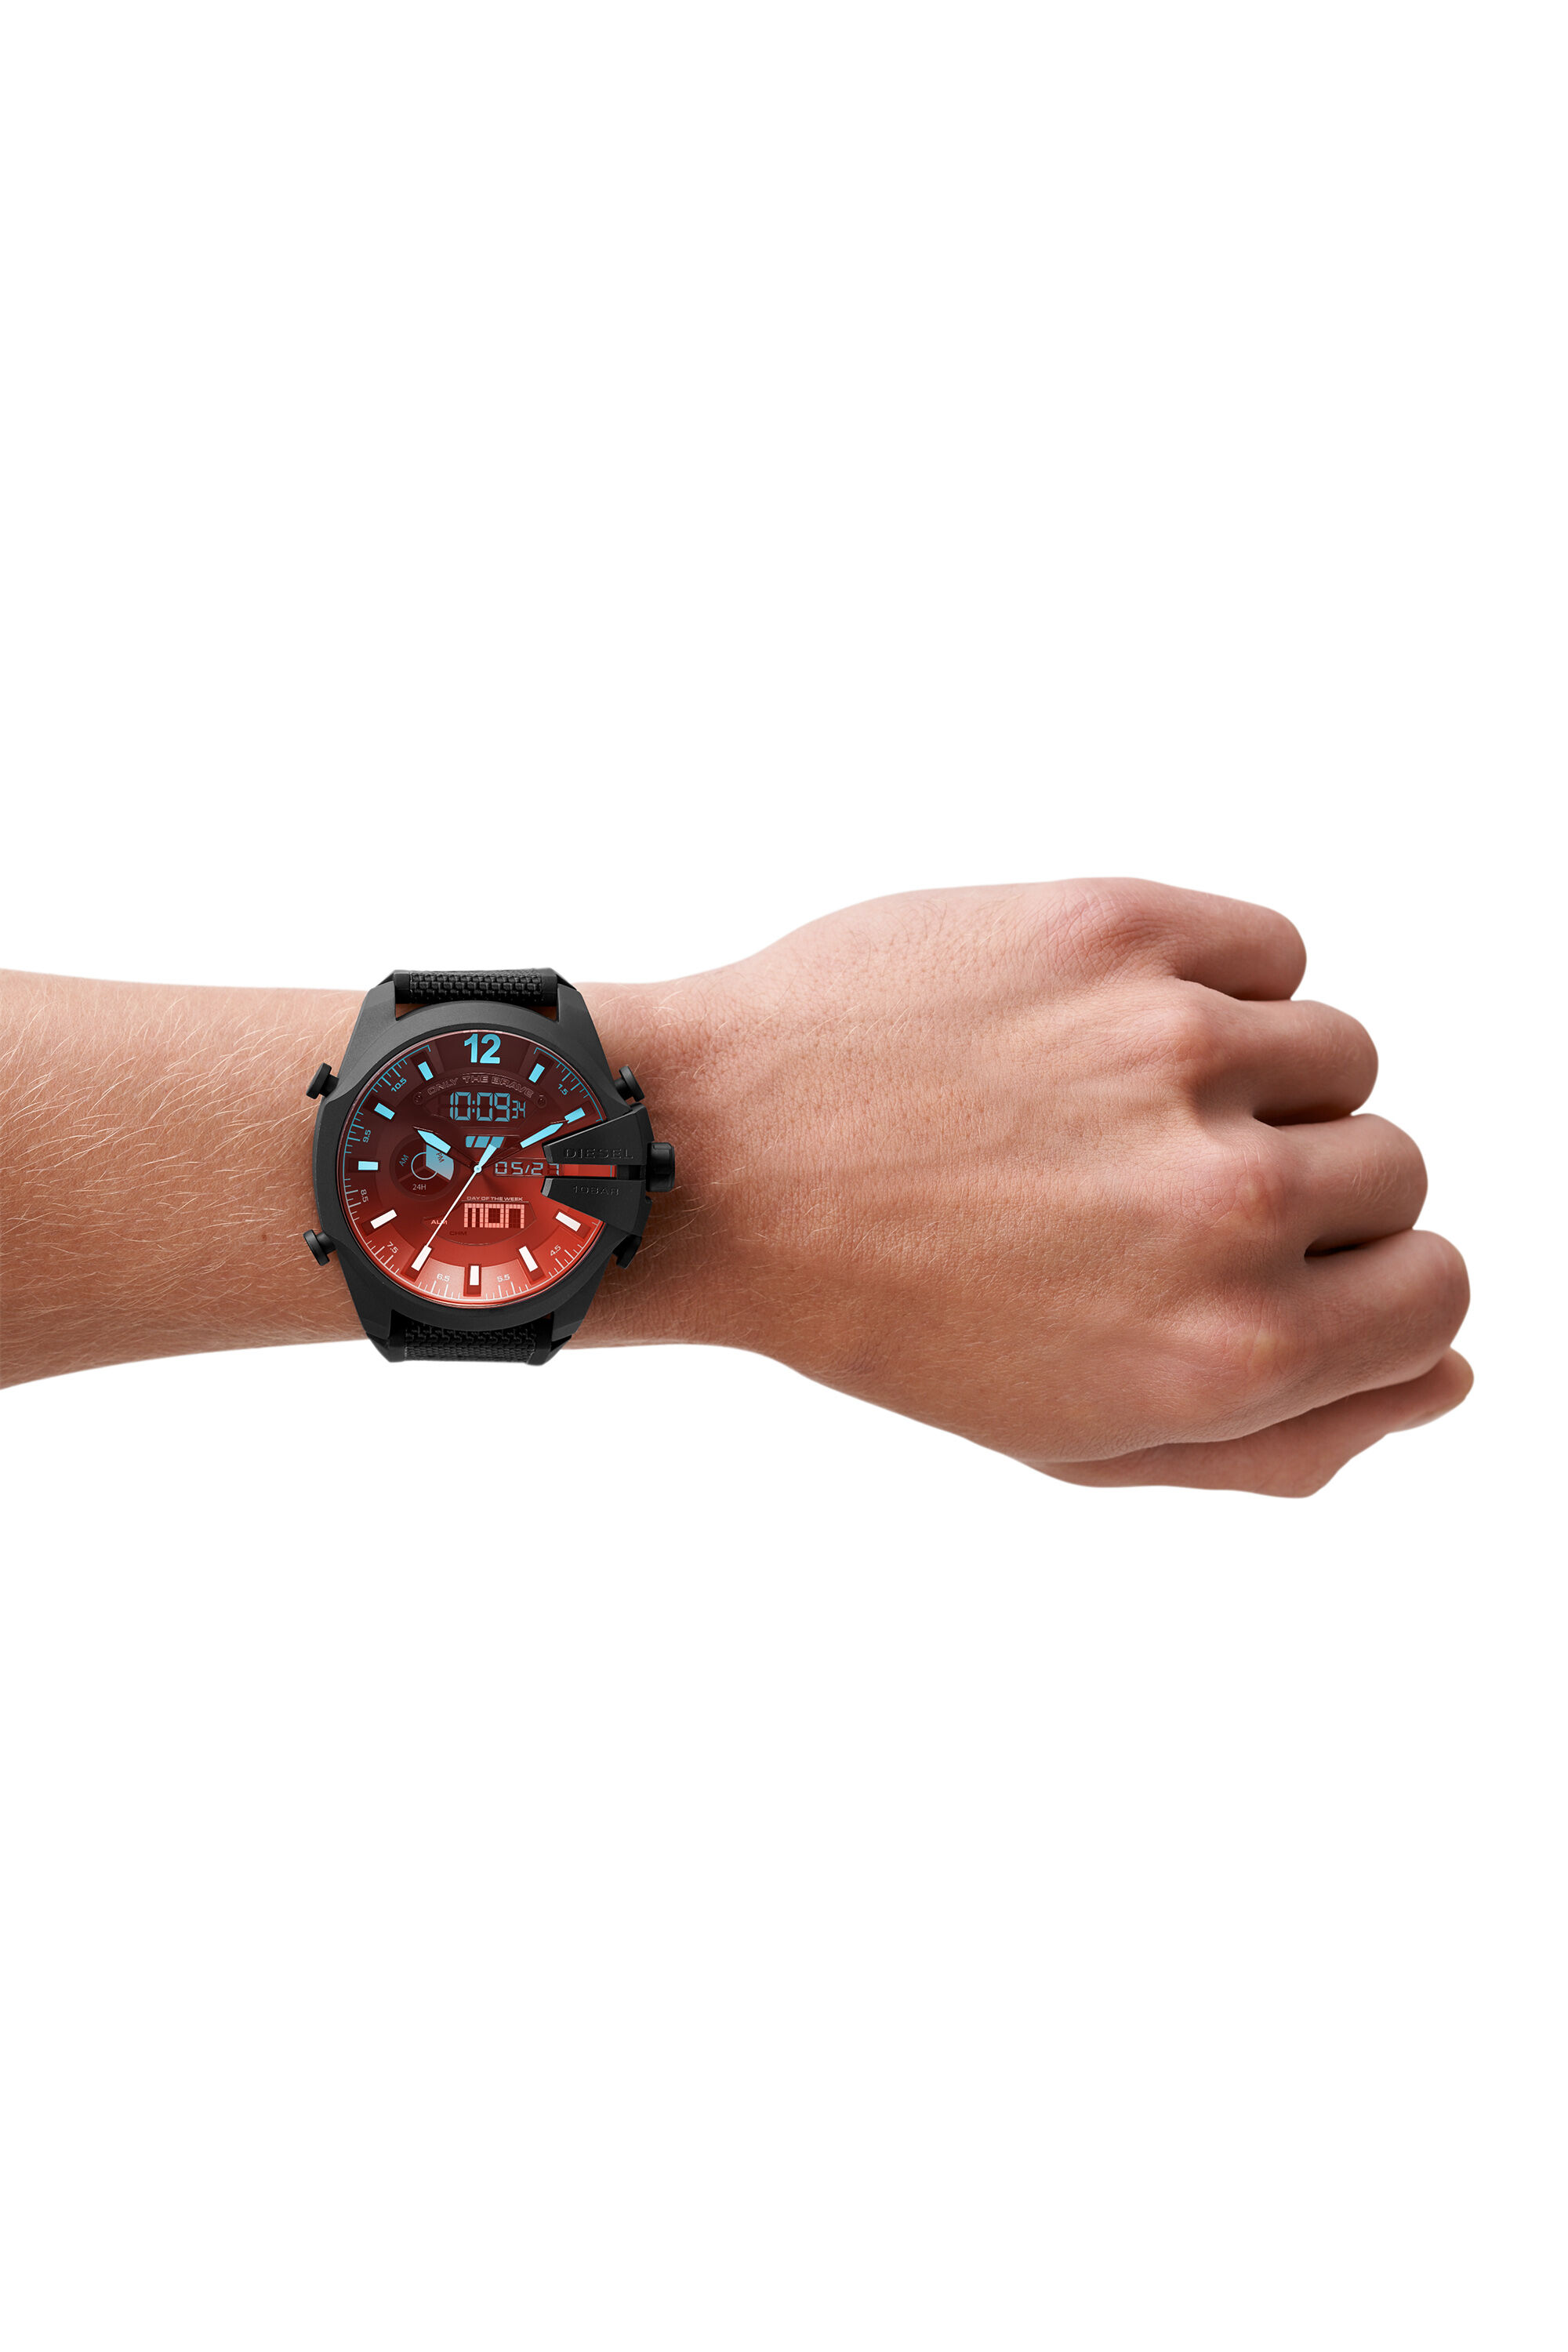 DR】1 diesel赤い文字盤腕時計ご確認画像腕時計(アナログ) - 腕時計